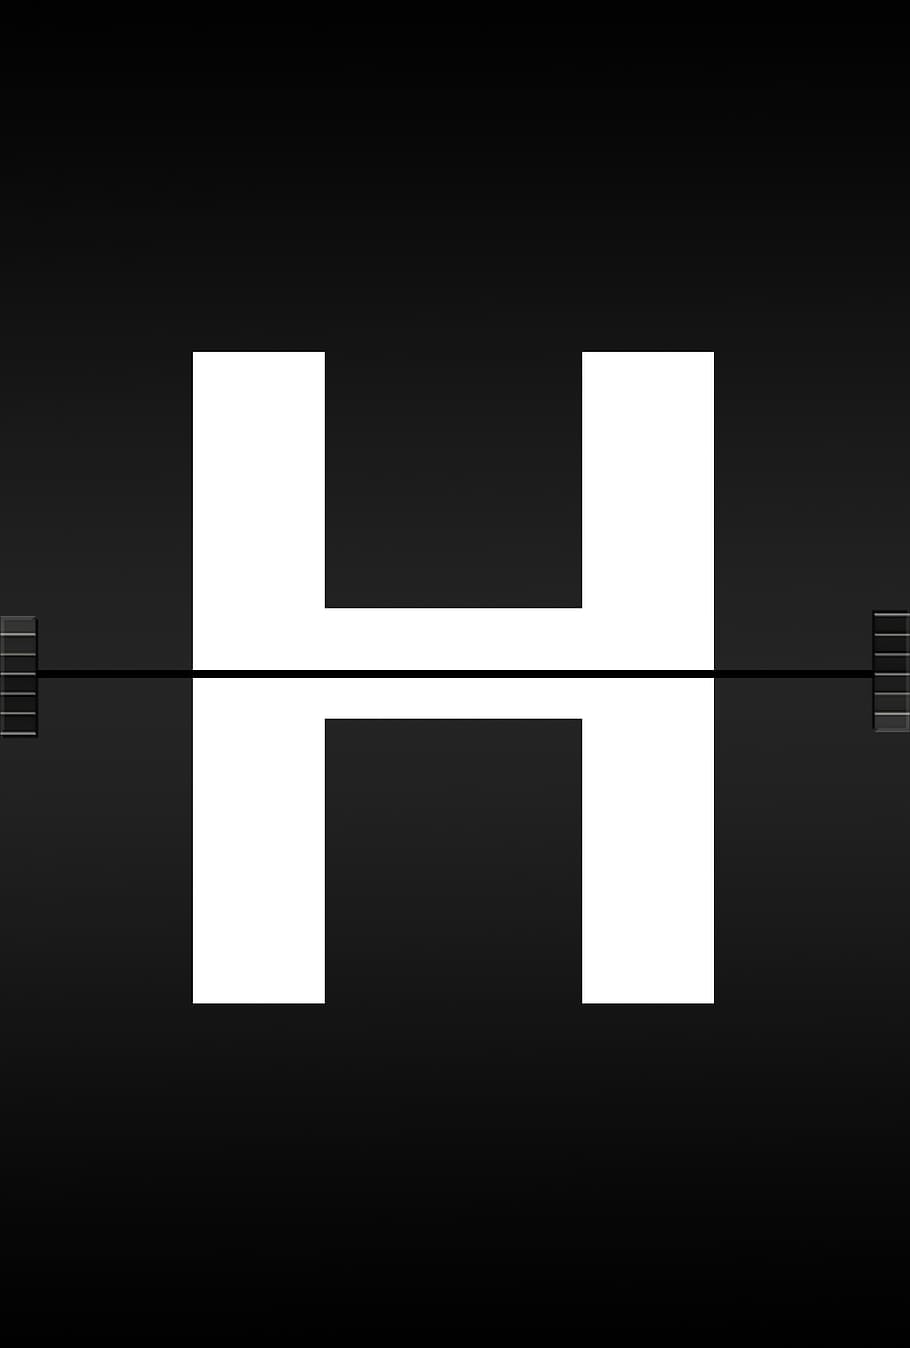 h-letter logo, letters, abc, alphabet, journal font, airport, scoreboard, ad, railway station, board